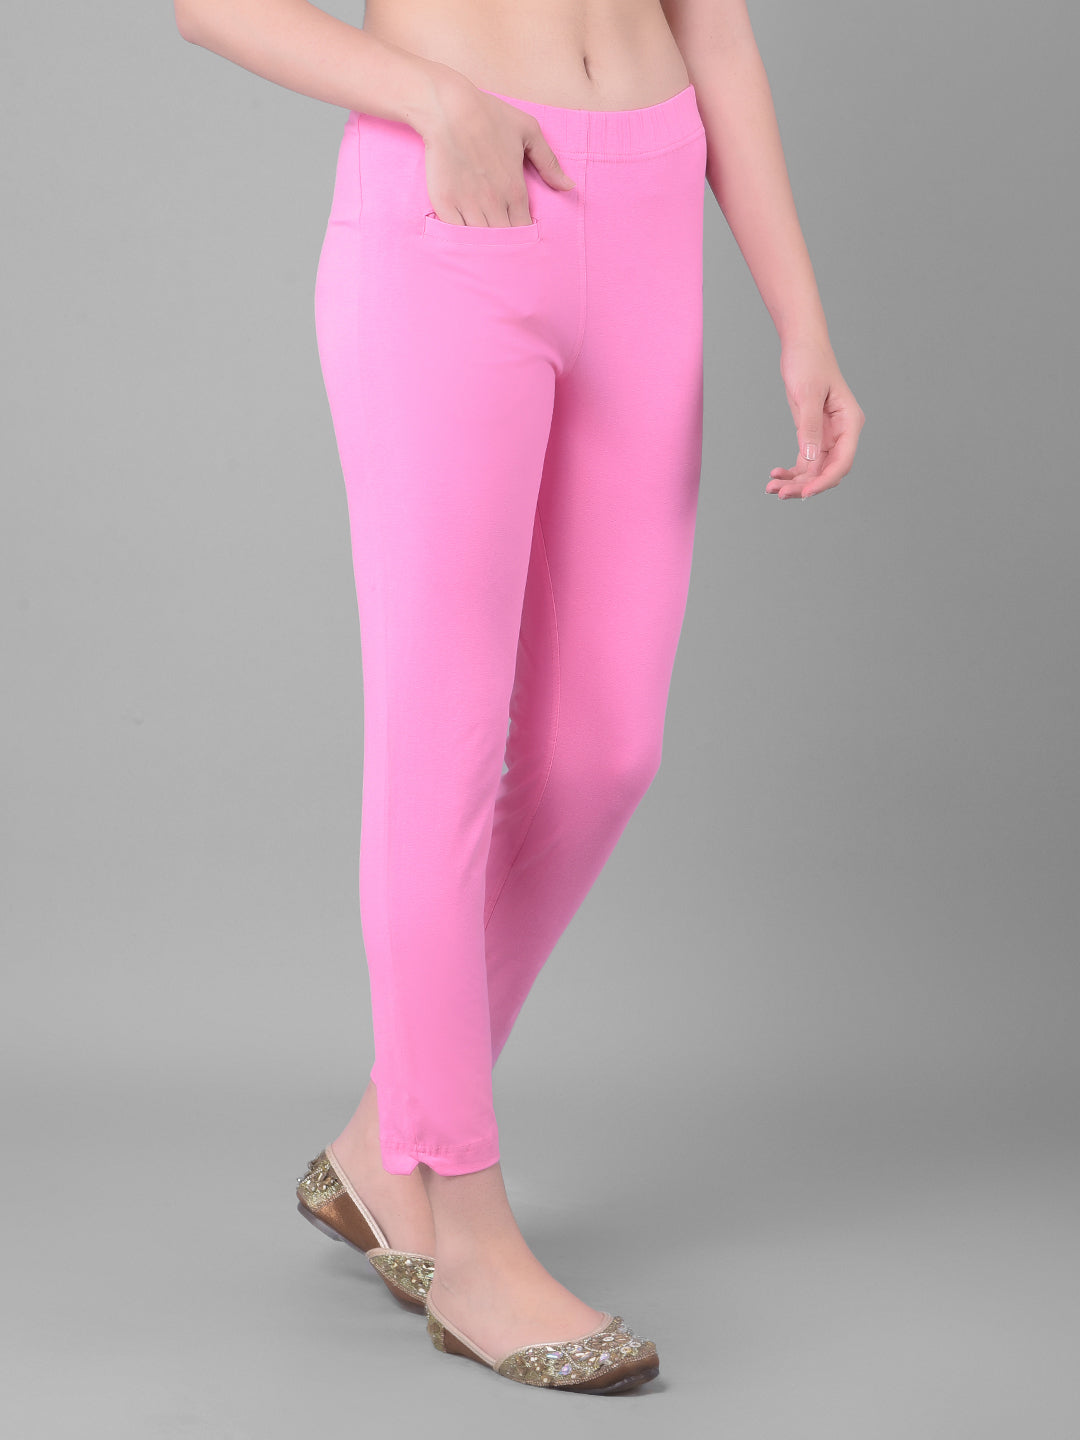 Plain Cotton KF Medium Size Comfort Lady Pant, 140 Gsm, Waist Size: 30.0 at  Rs 240/piece in Surat